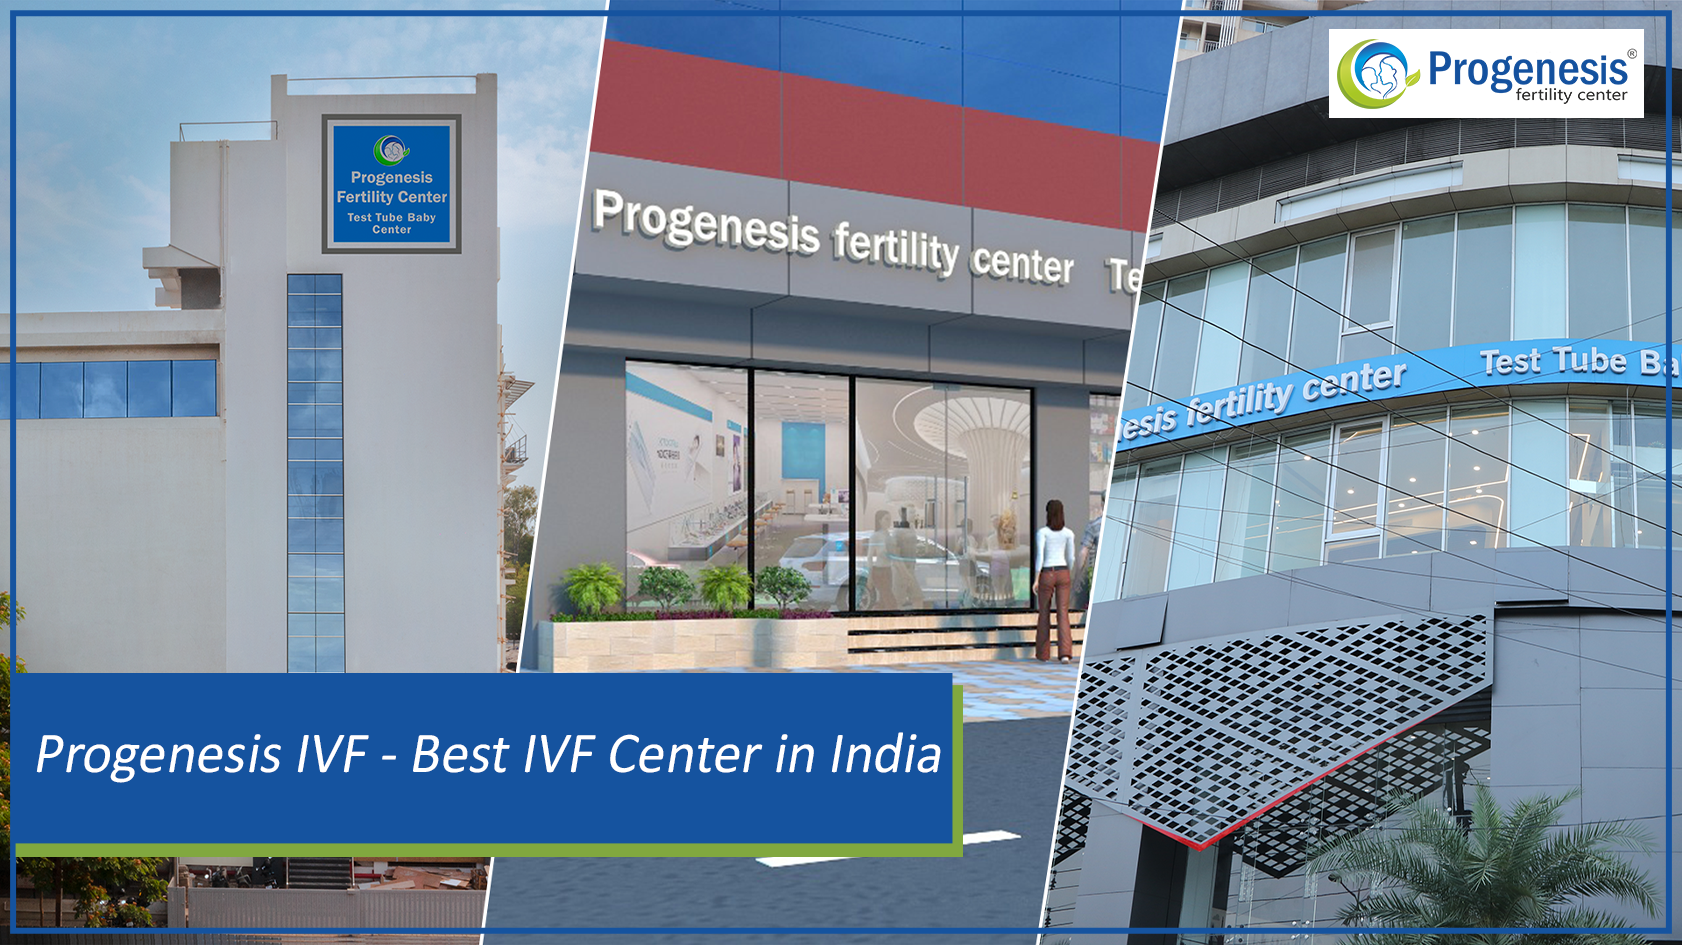 Progenesis IVF - Best IVF Center in India